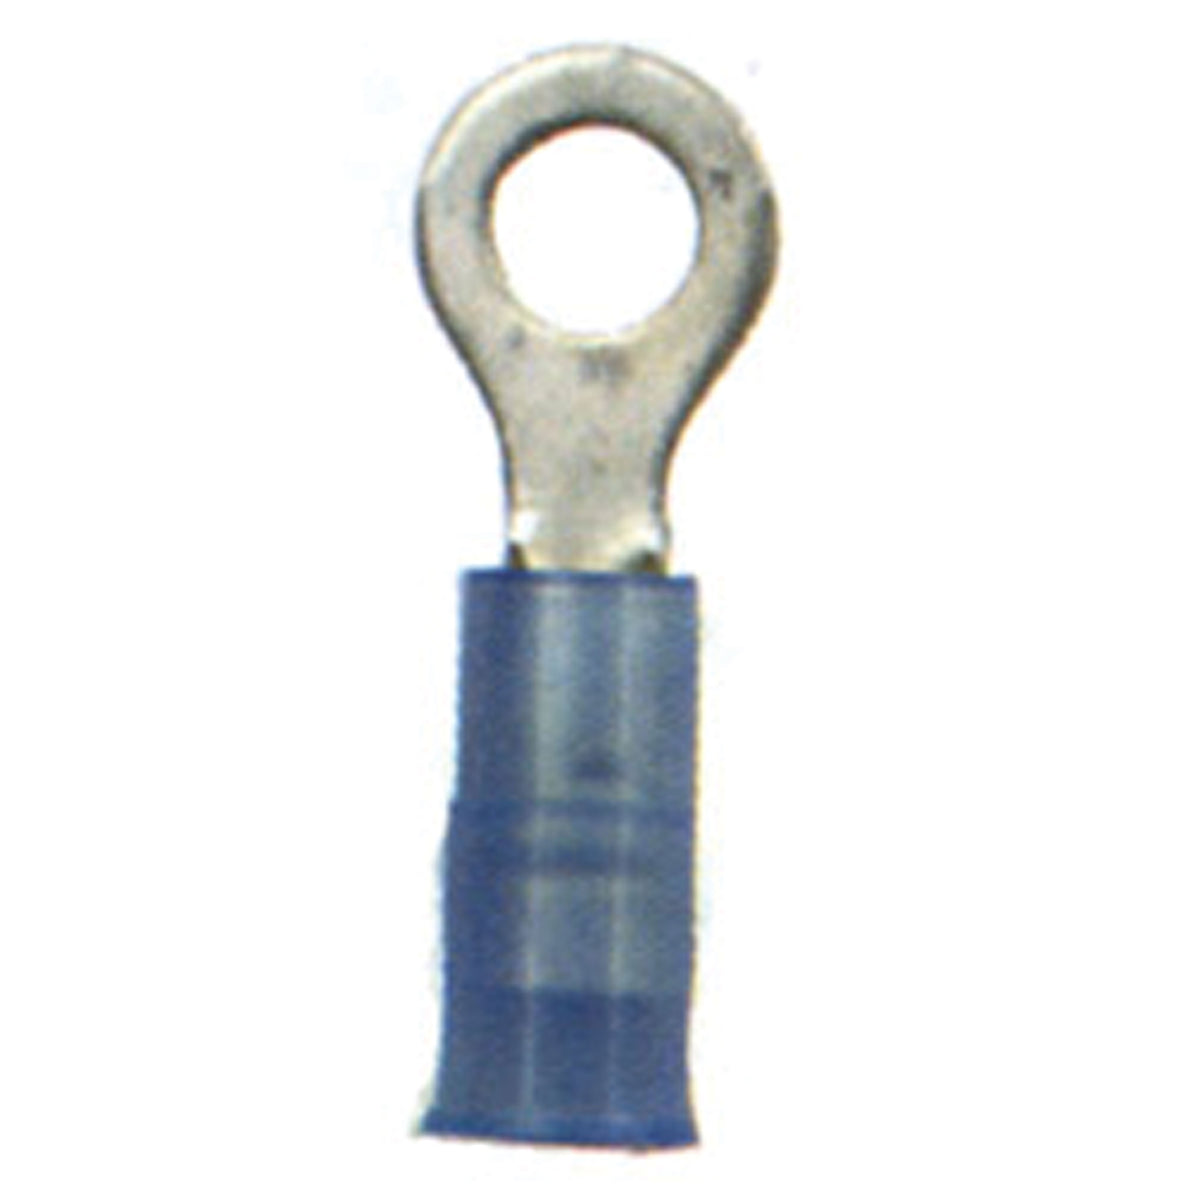 Ancor 230216 Nylon Ring Terminal - 16-14, 3/8", Blue, Pack of 5